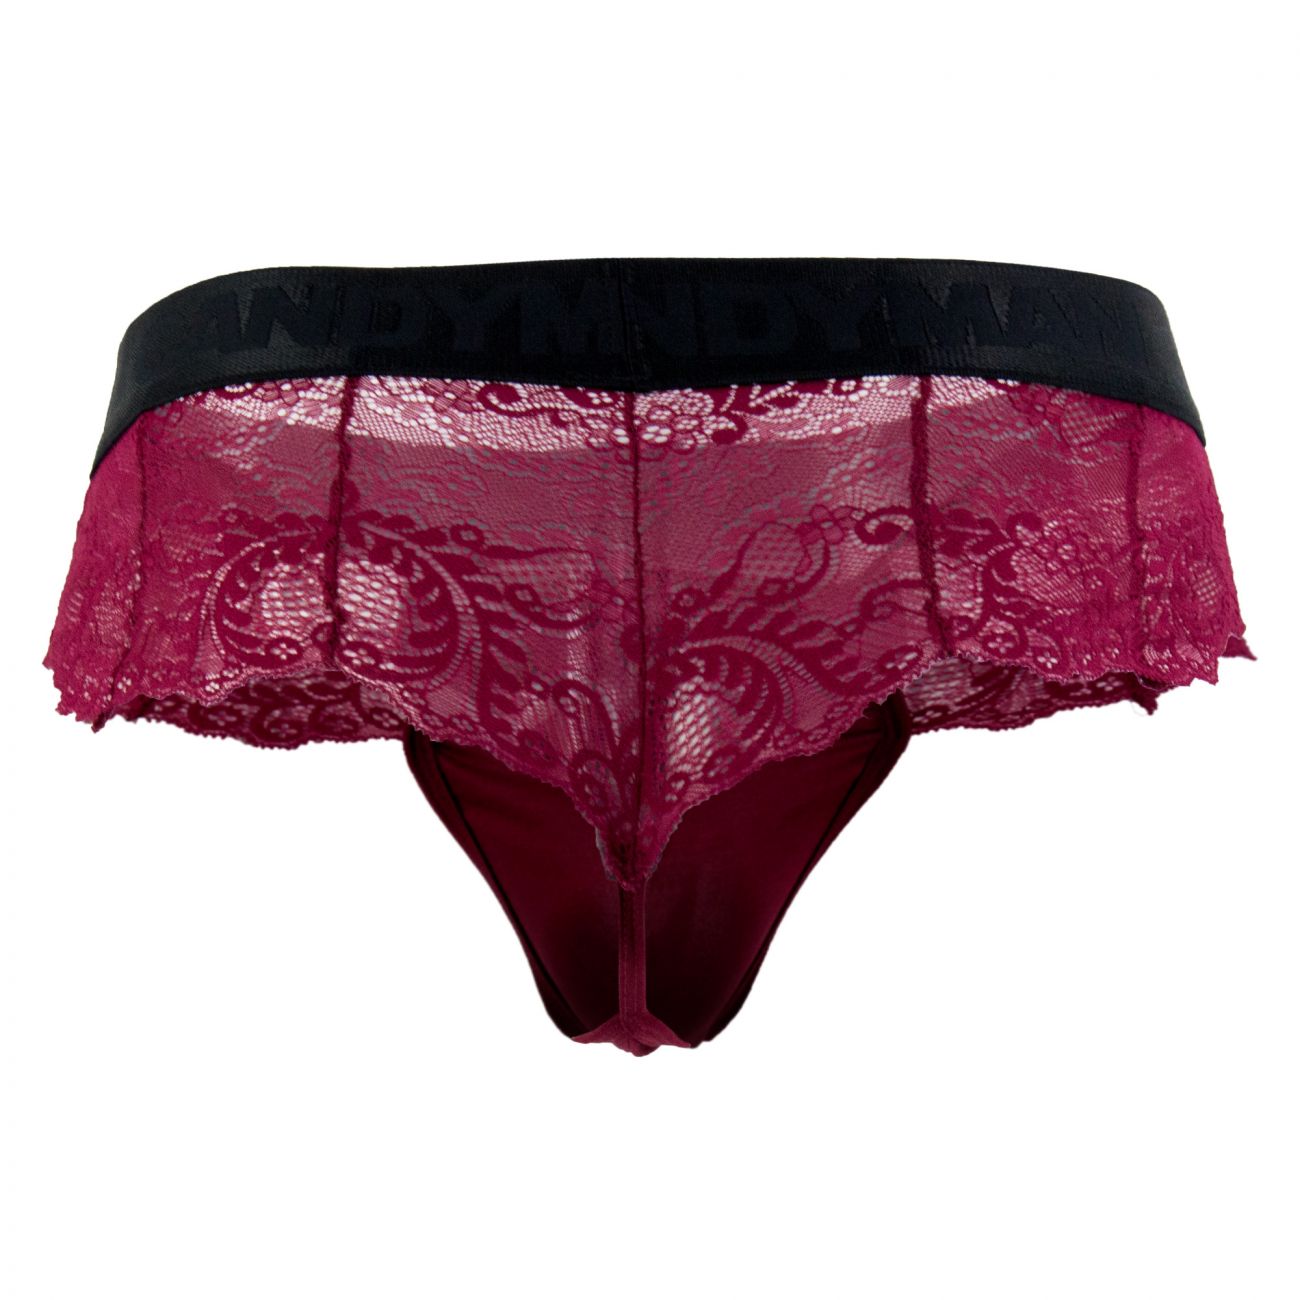 CandyMan 99304X Lace Thongs Burgundy Plus Sizes